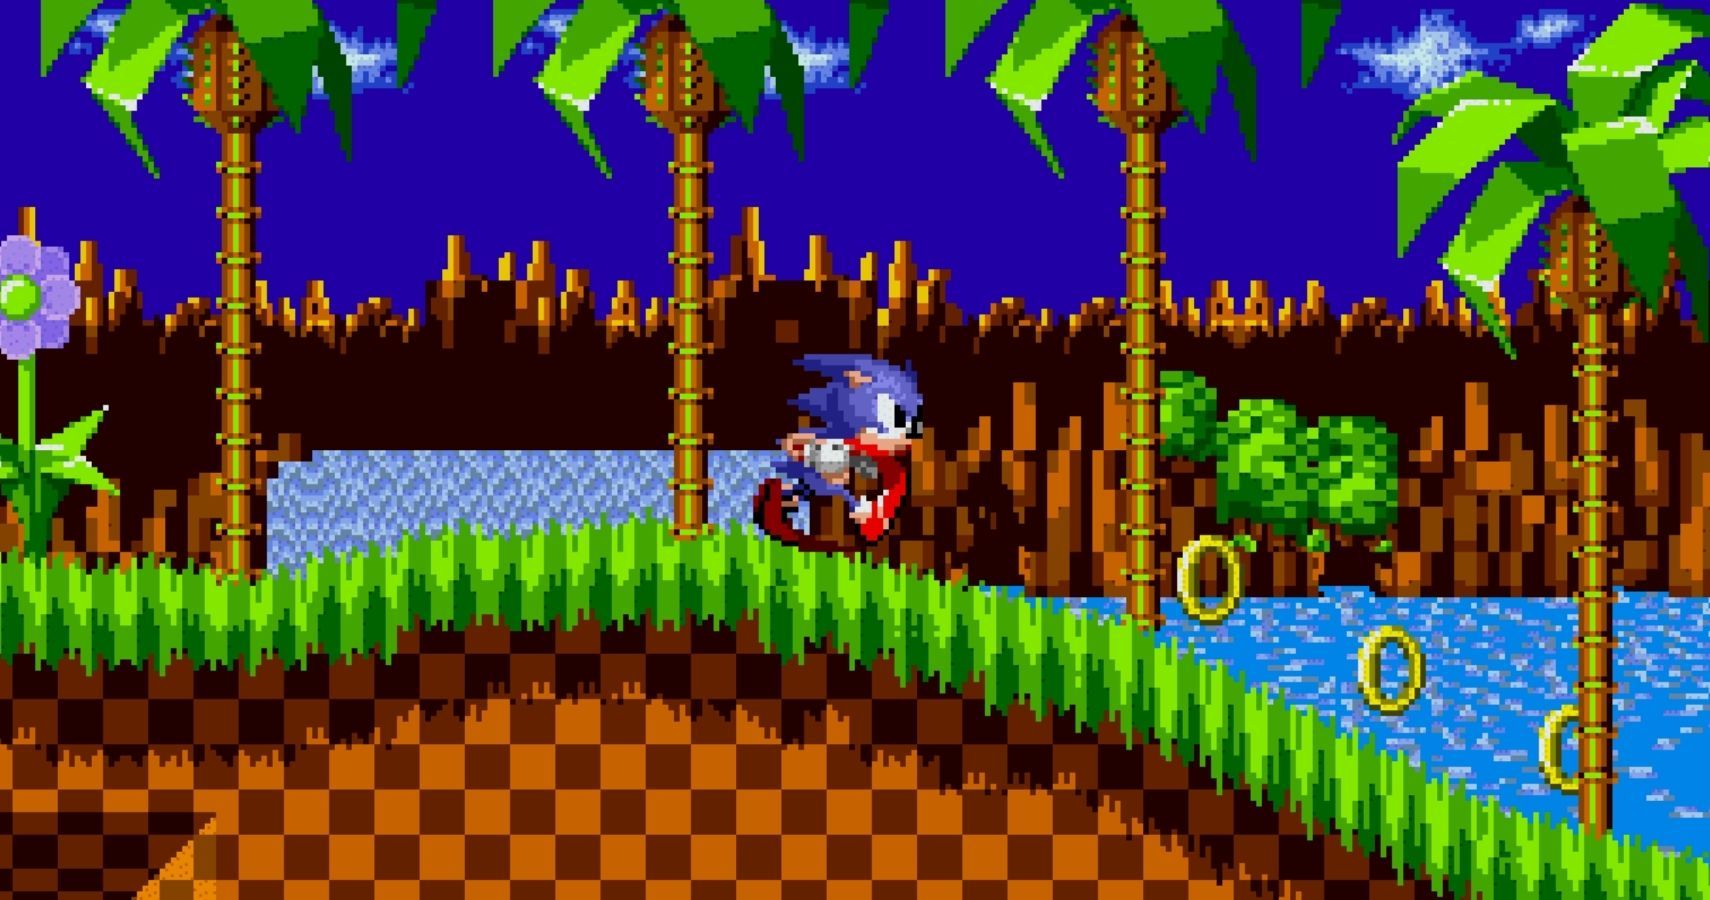 Sonic - a blue humanoid hedgehog - runs through green hills, collecting rings